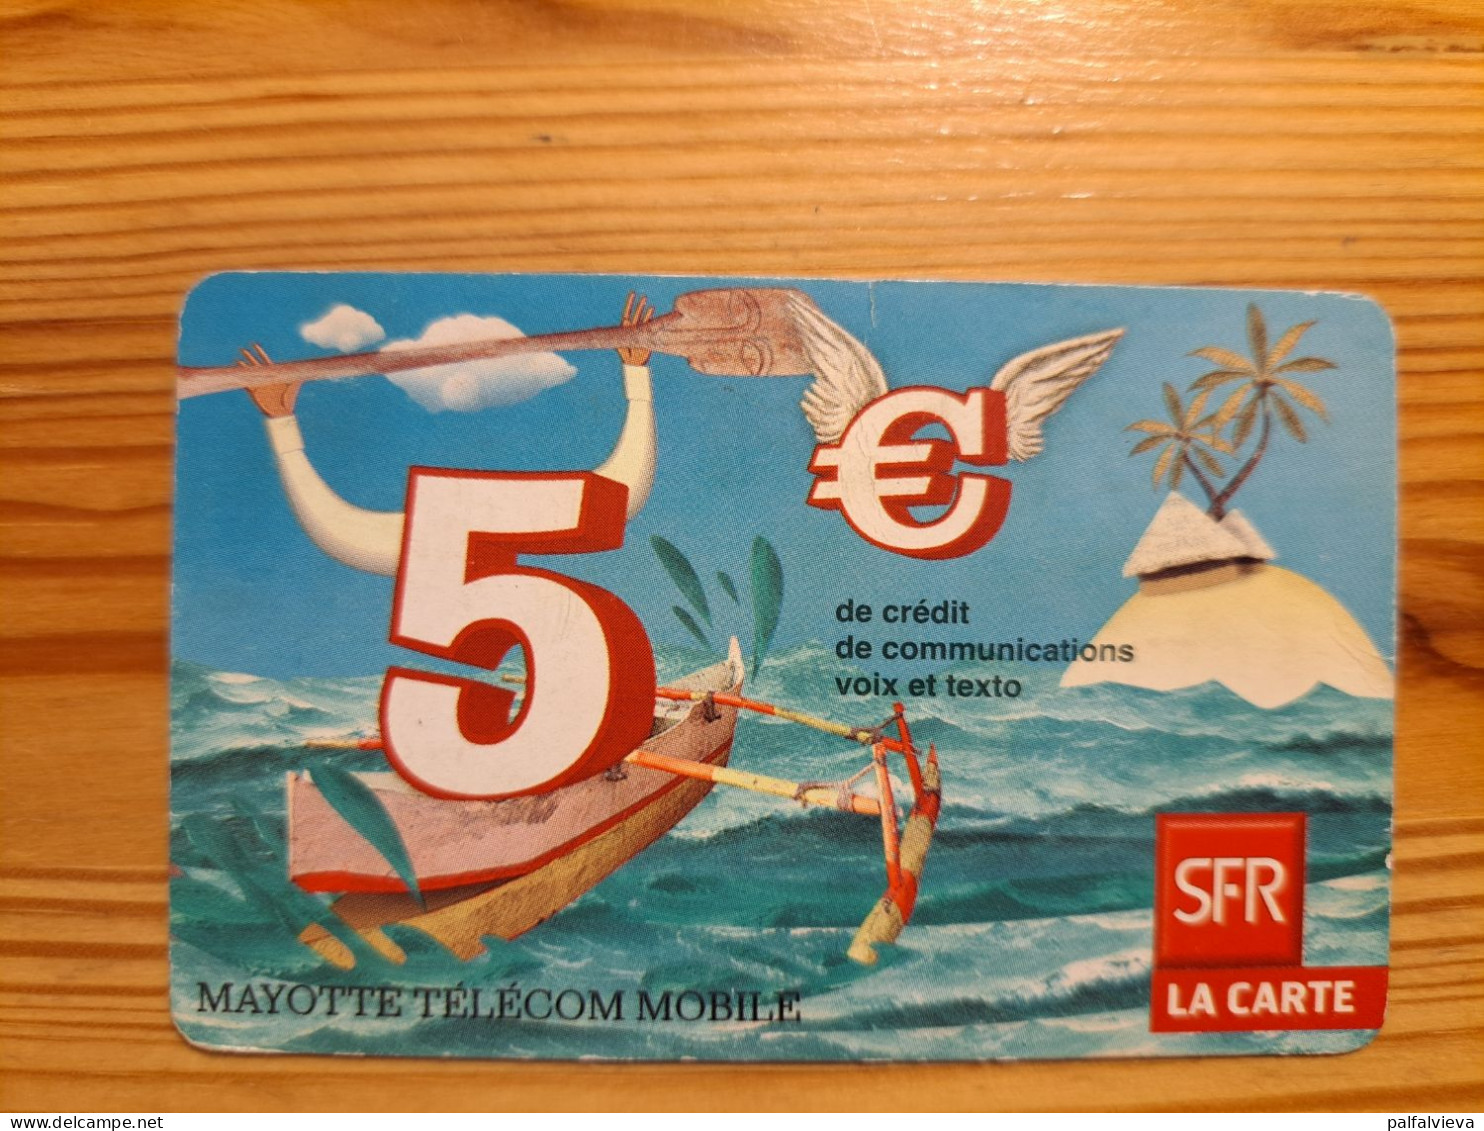 Prepaid Phonecard France, Mayotte, SFR - Mobicartes (recharges)